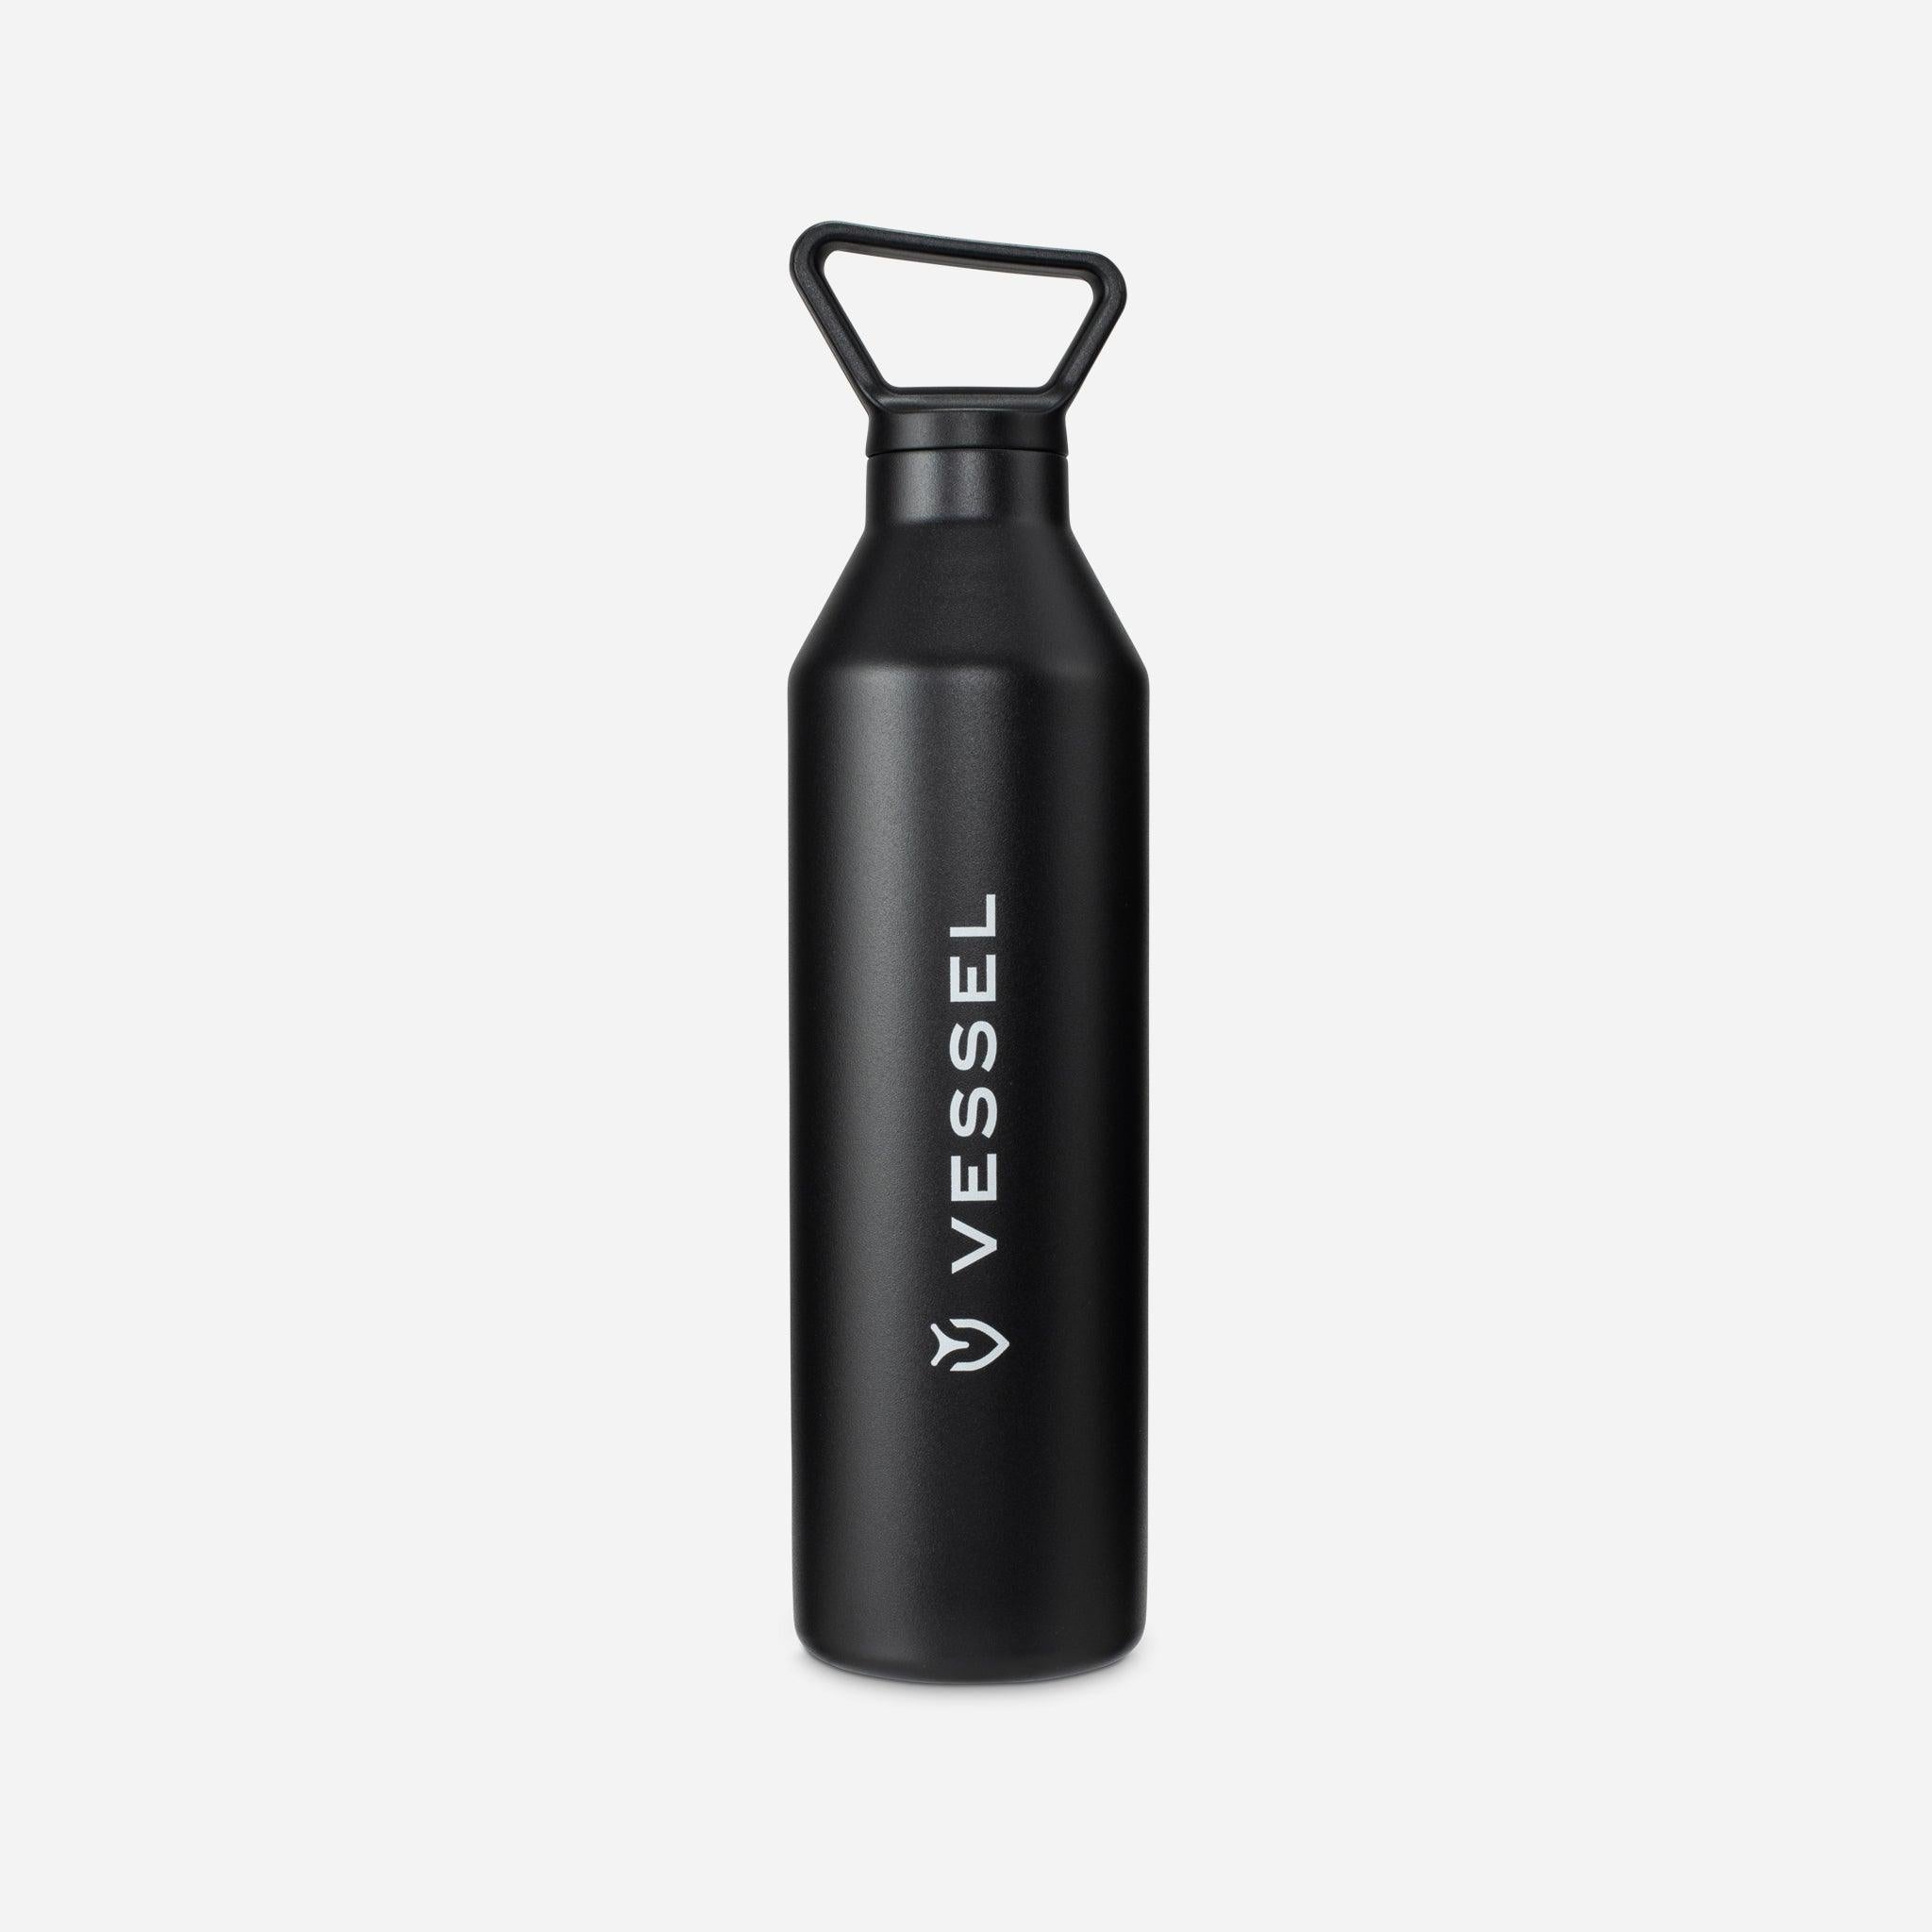 BMW Stainless Steel Water Bottle, Standard Lid. Water bottle with